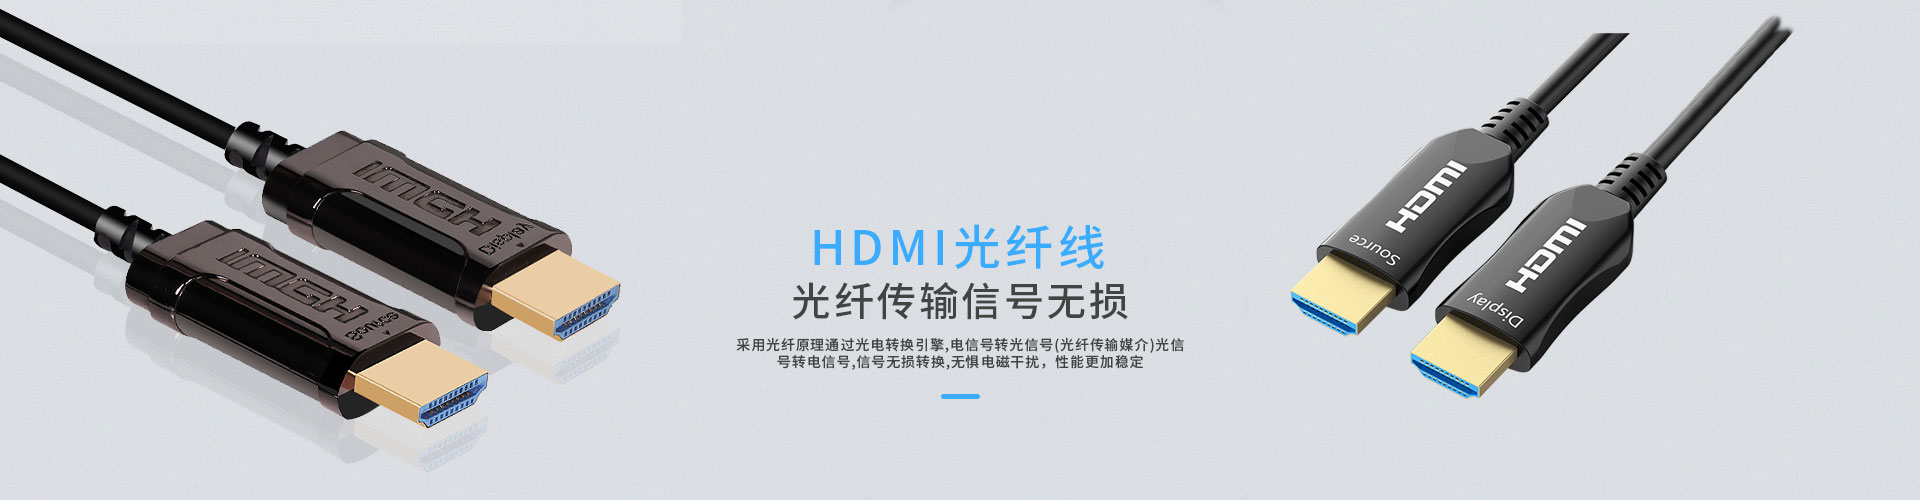 江苏hgα030皇冠HDMI